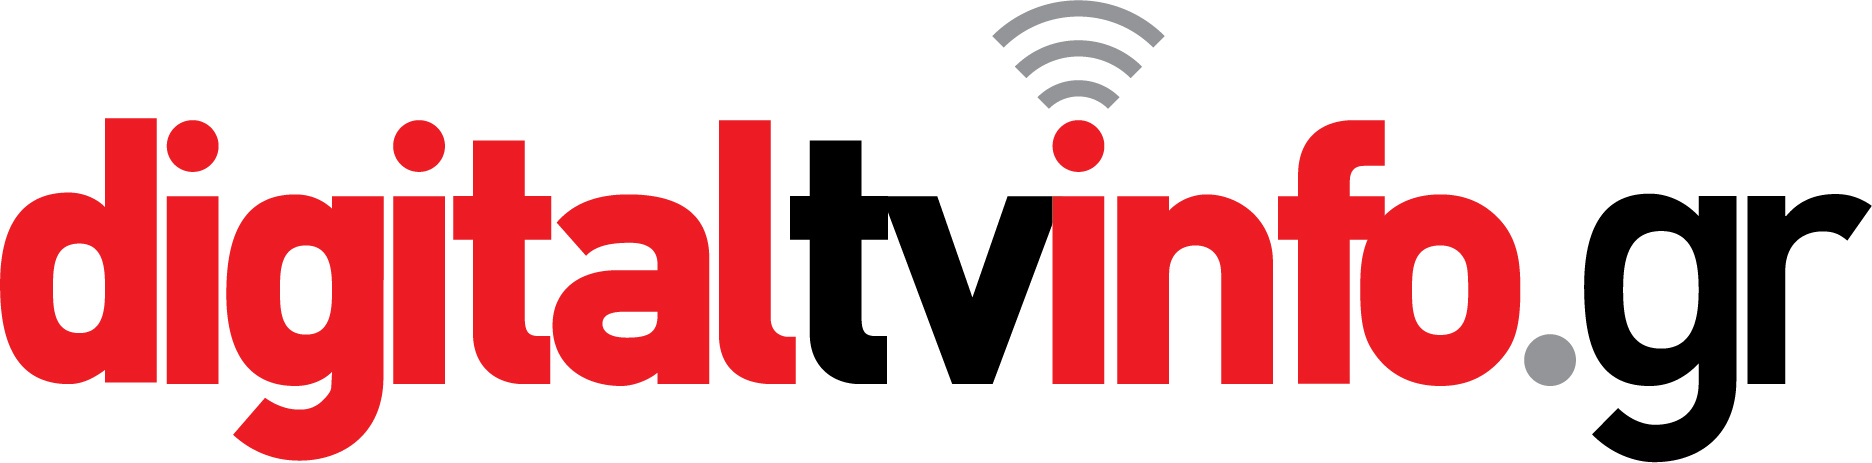 Digital_tv_info_logo